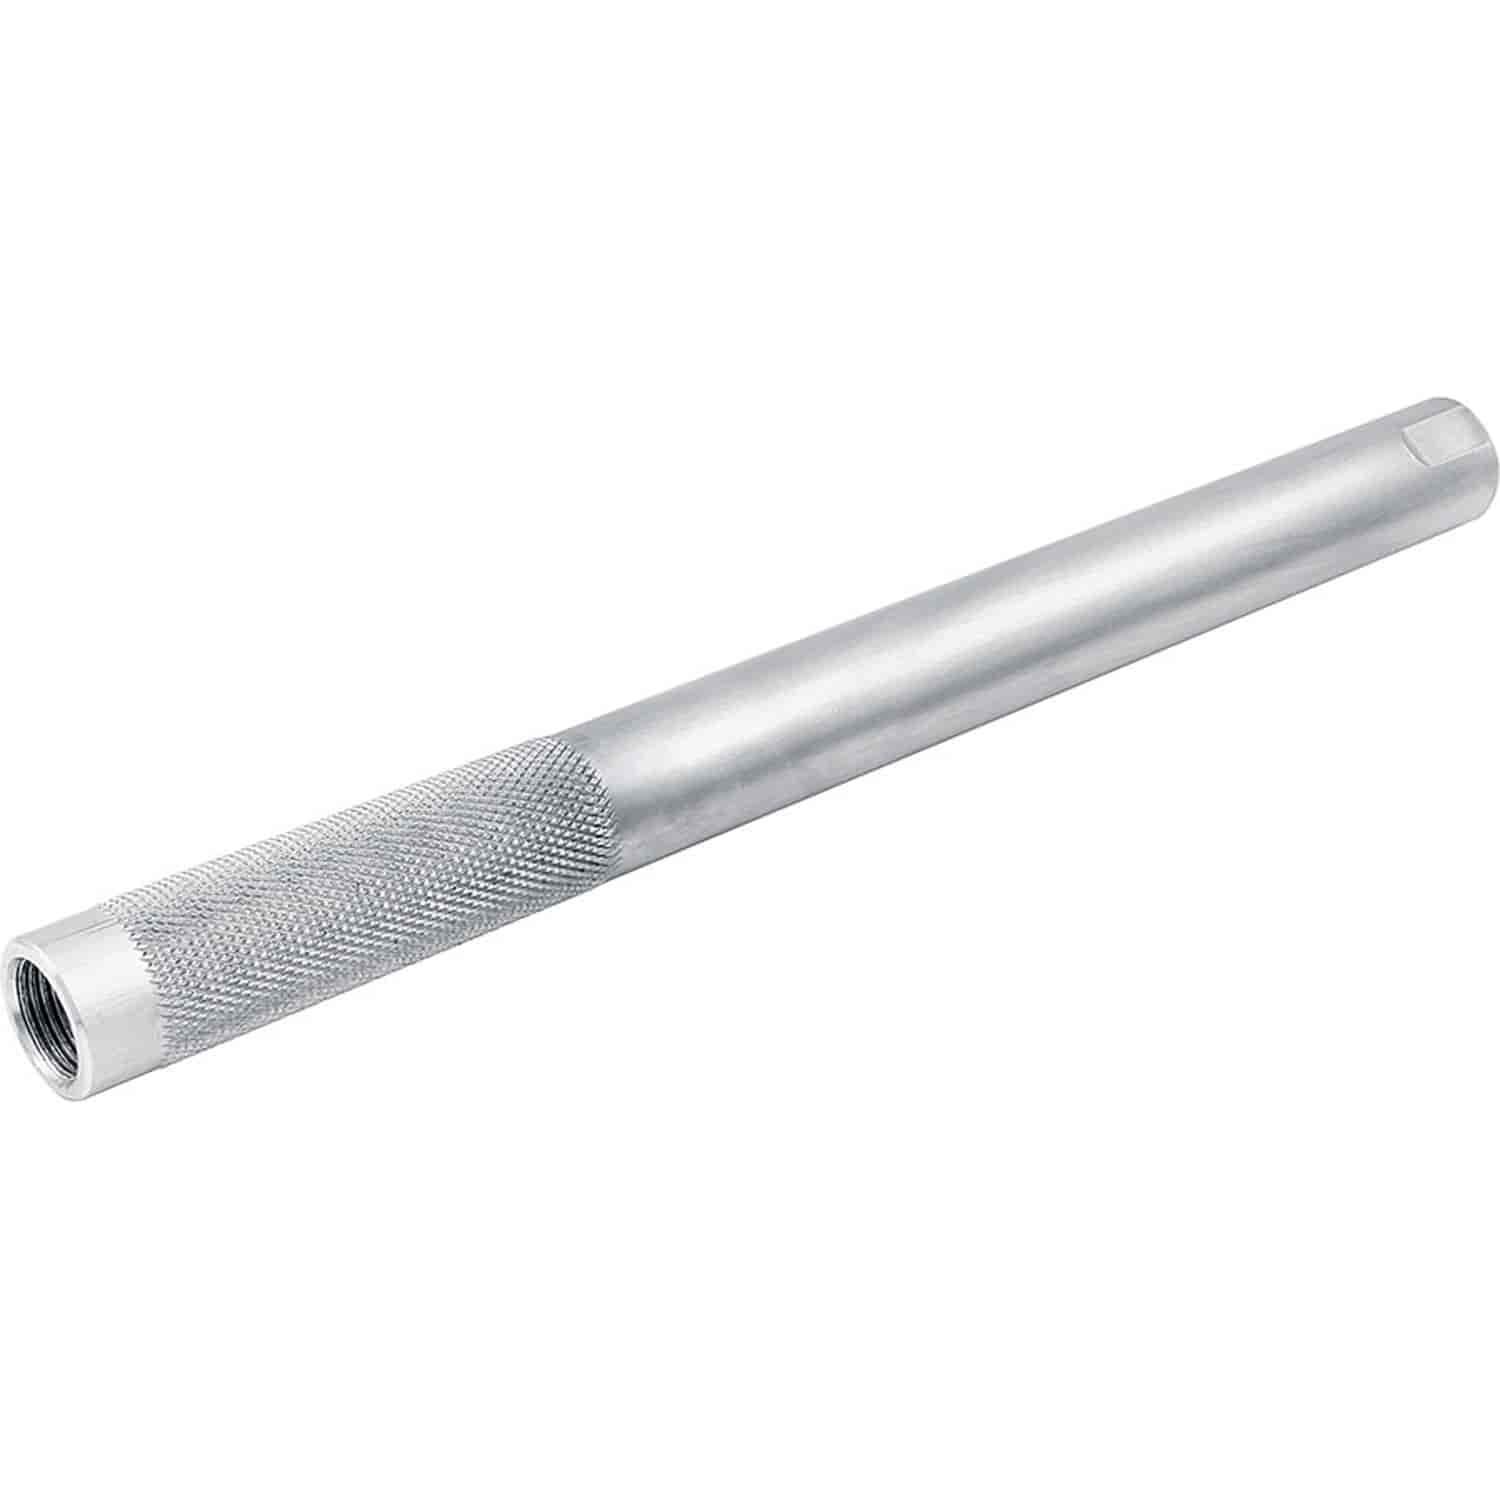 Swedged Aluminum Tie Rod Tube Length: 23